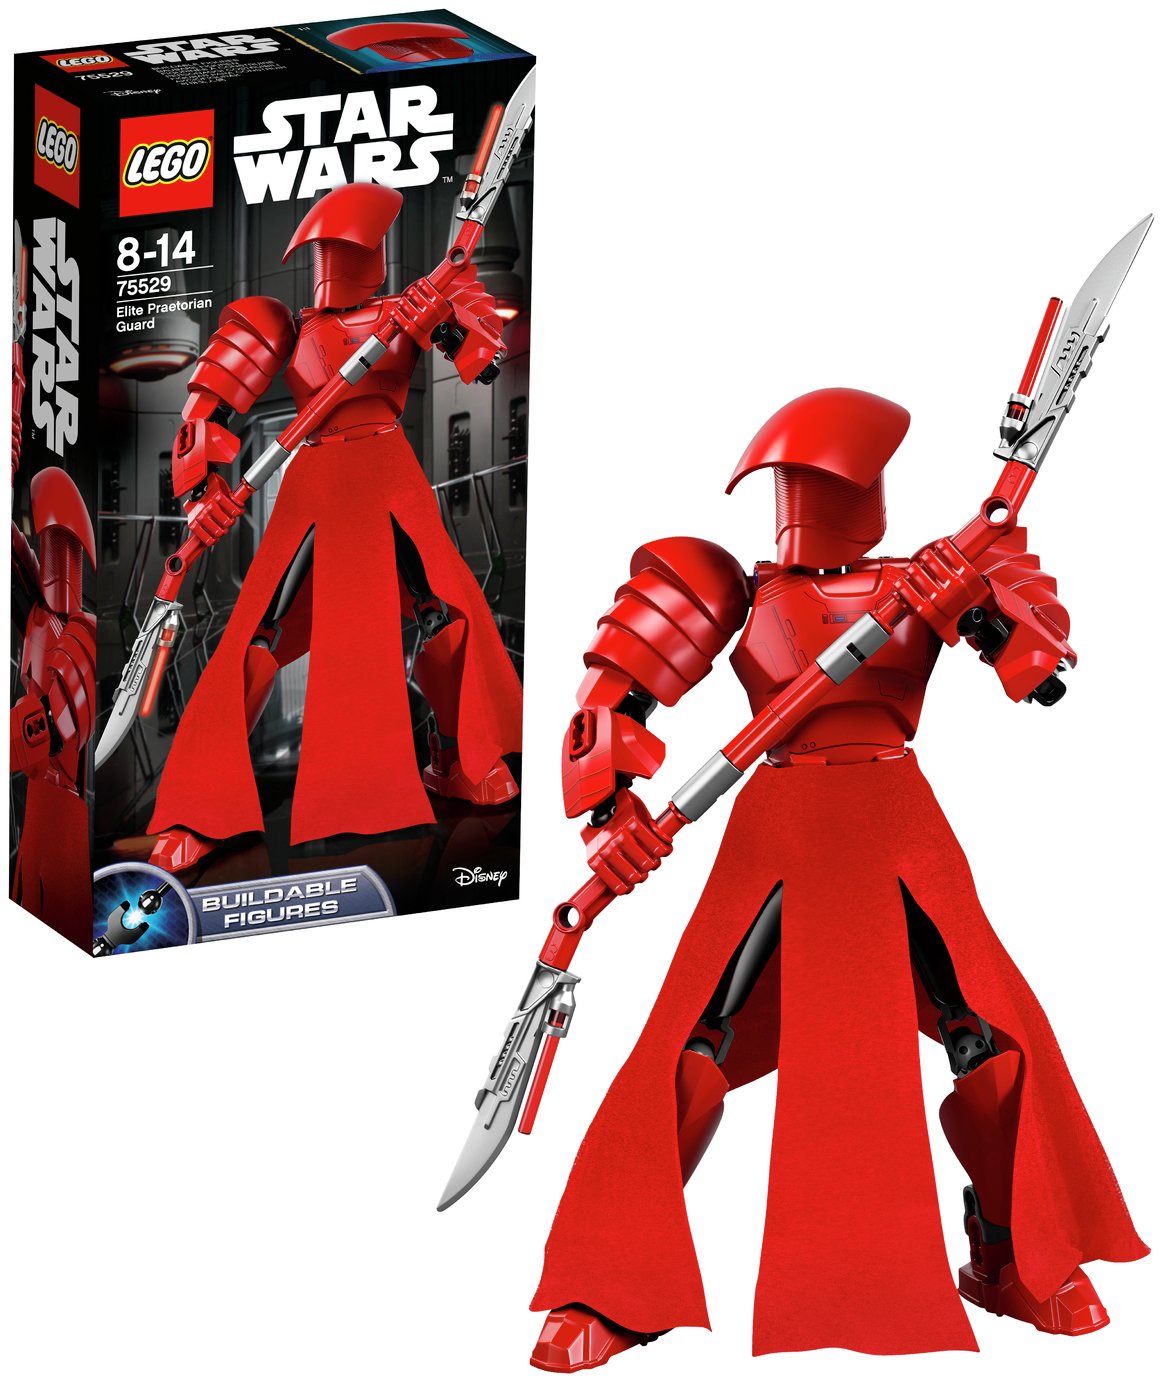 Lego Star Wars Elite Praetorian Guard Reviews